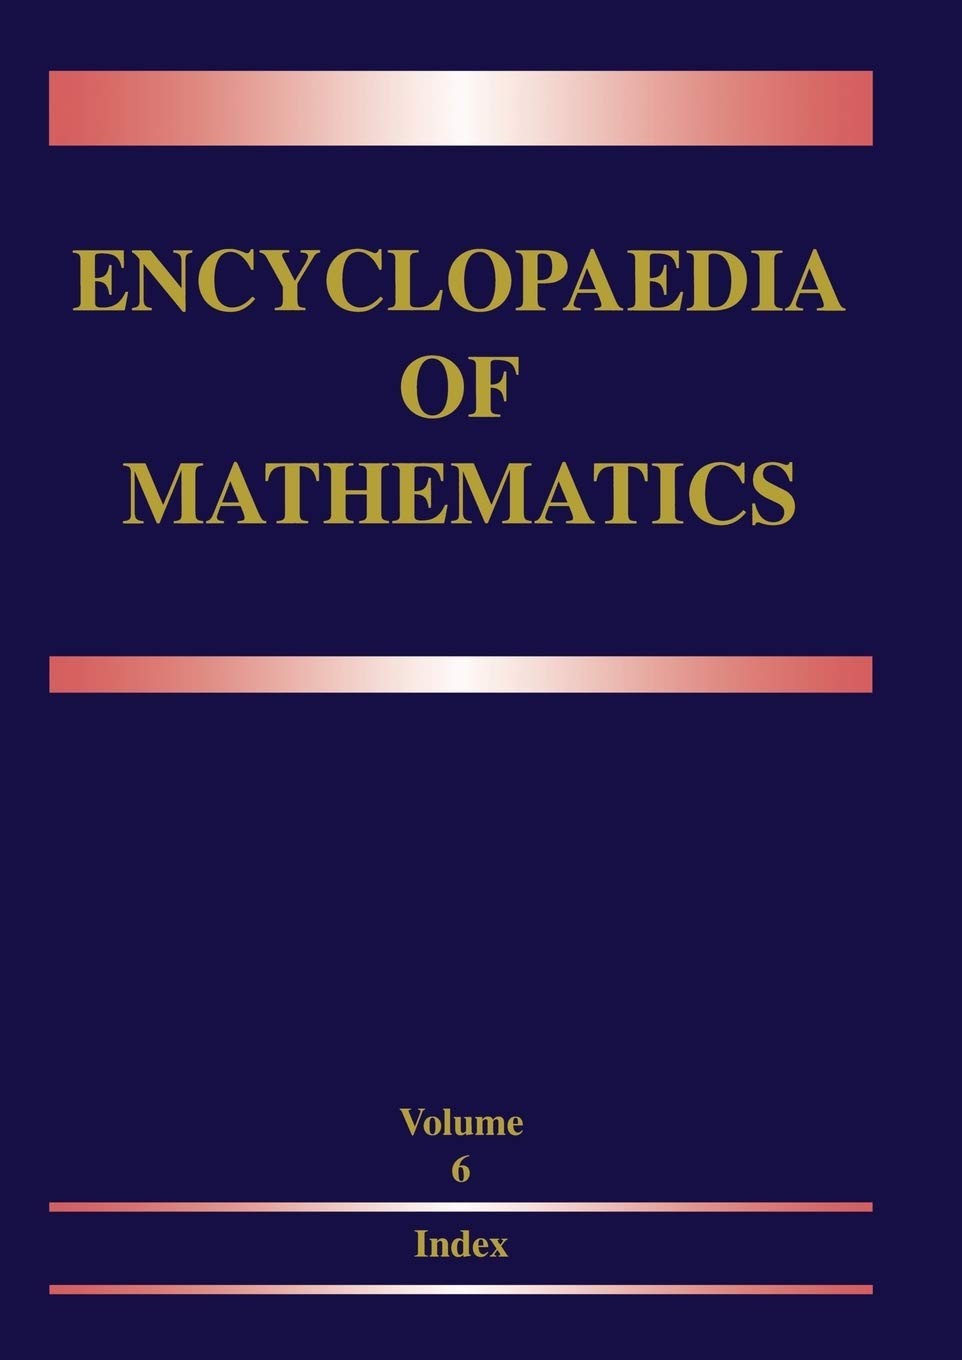 Encyclopaedia of Mathematics: Volume 6: Subject Index — Author Index